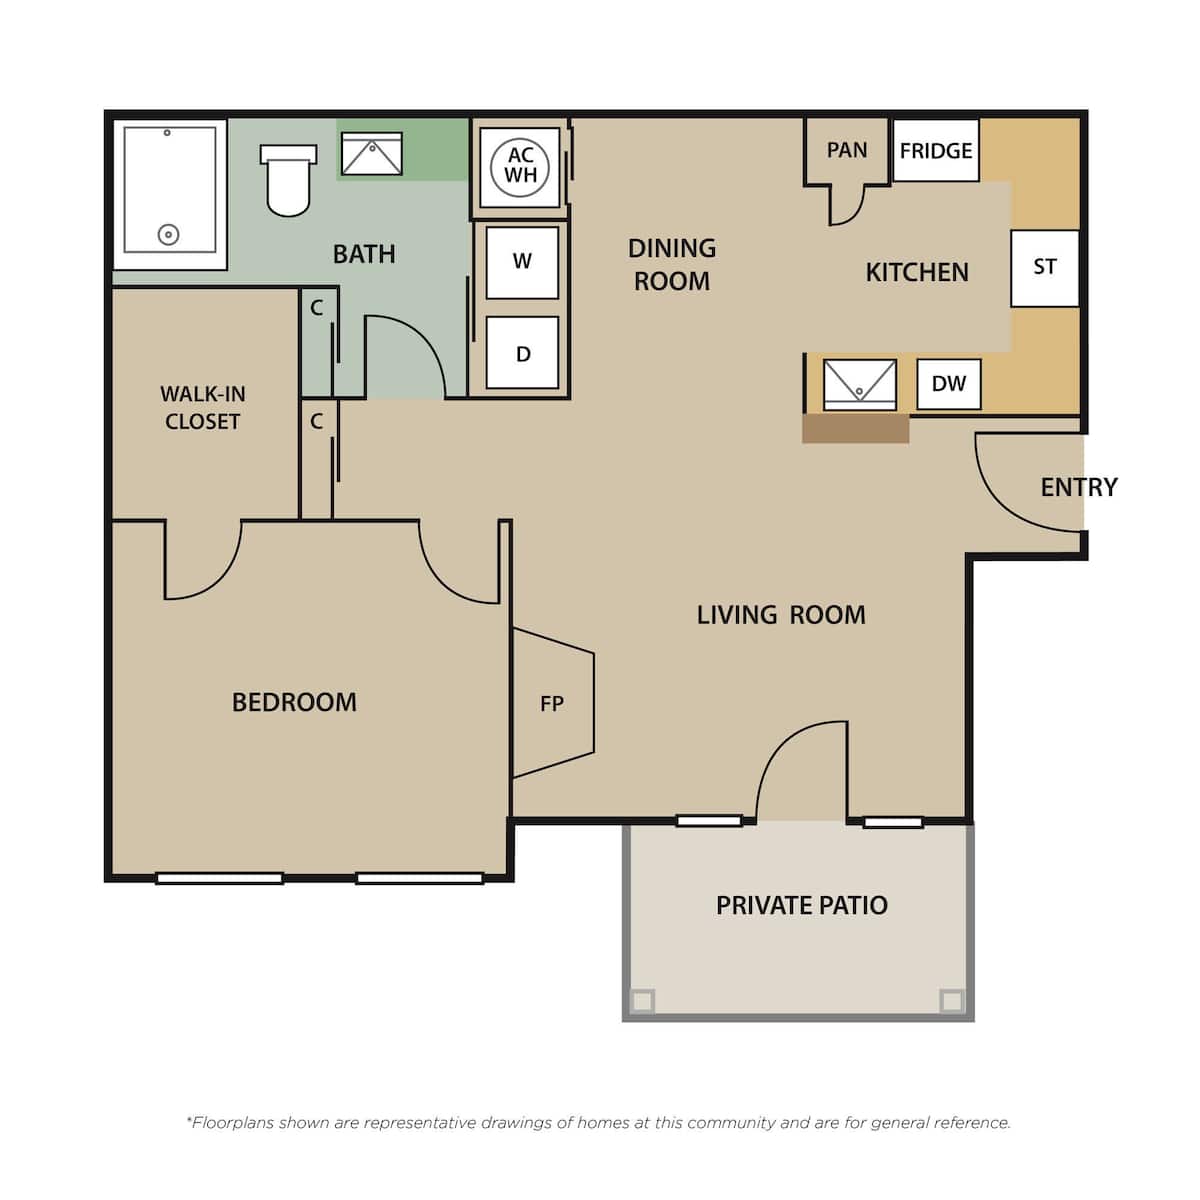 Floorplan diagram for GROVE A3, showing 1 bedroom